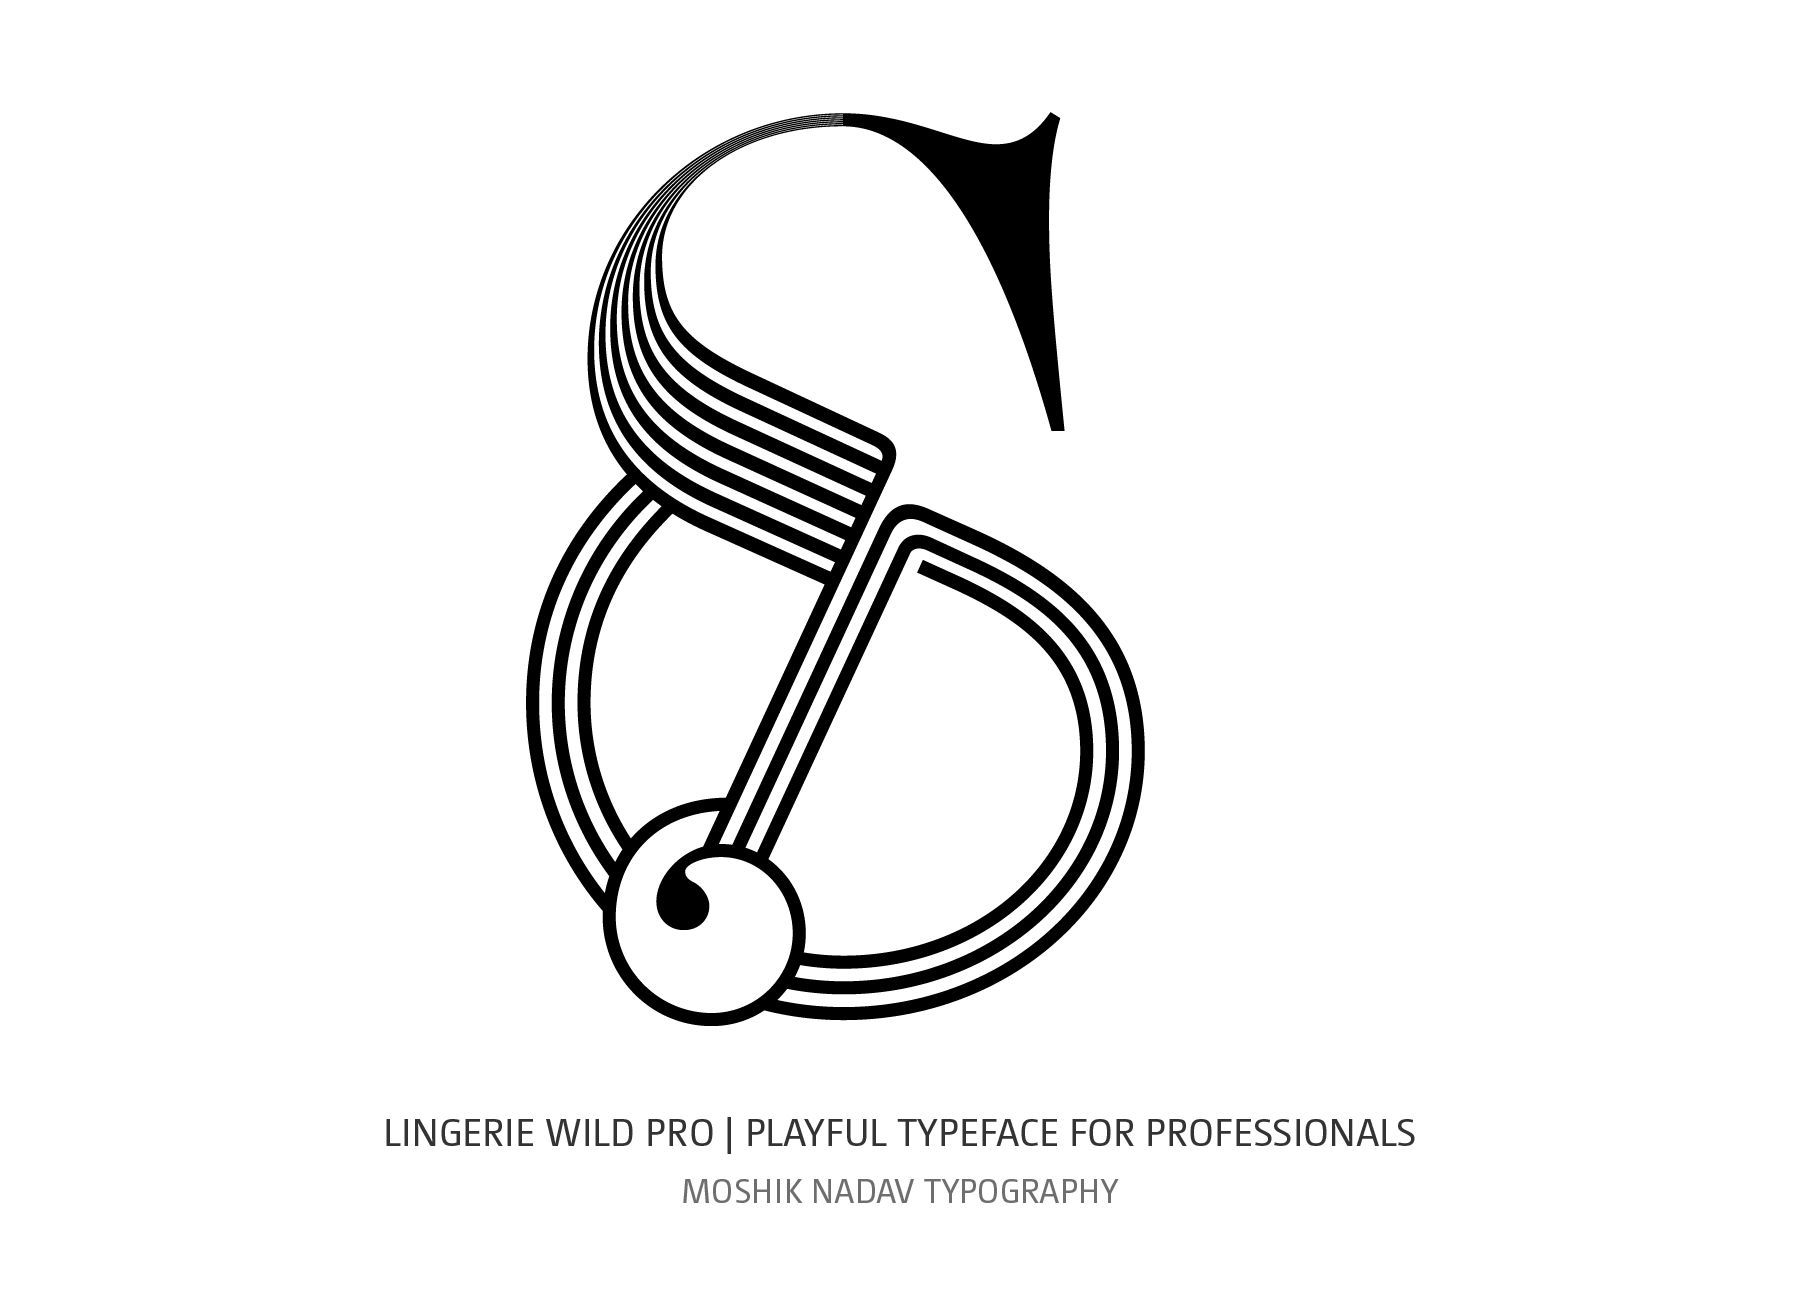 Contemporary ampersand designed by Moshik Nadav Typography